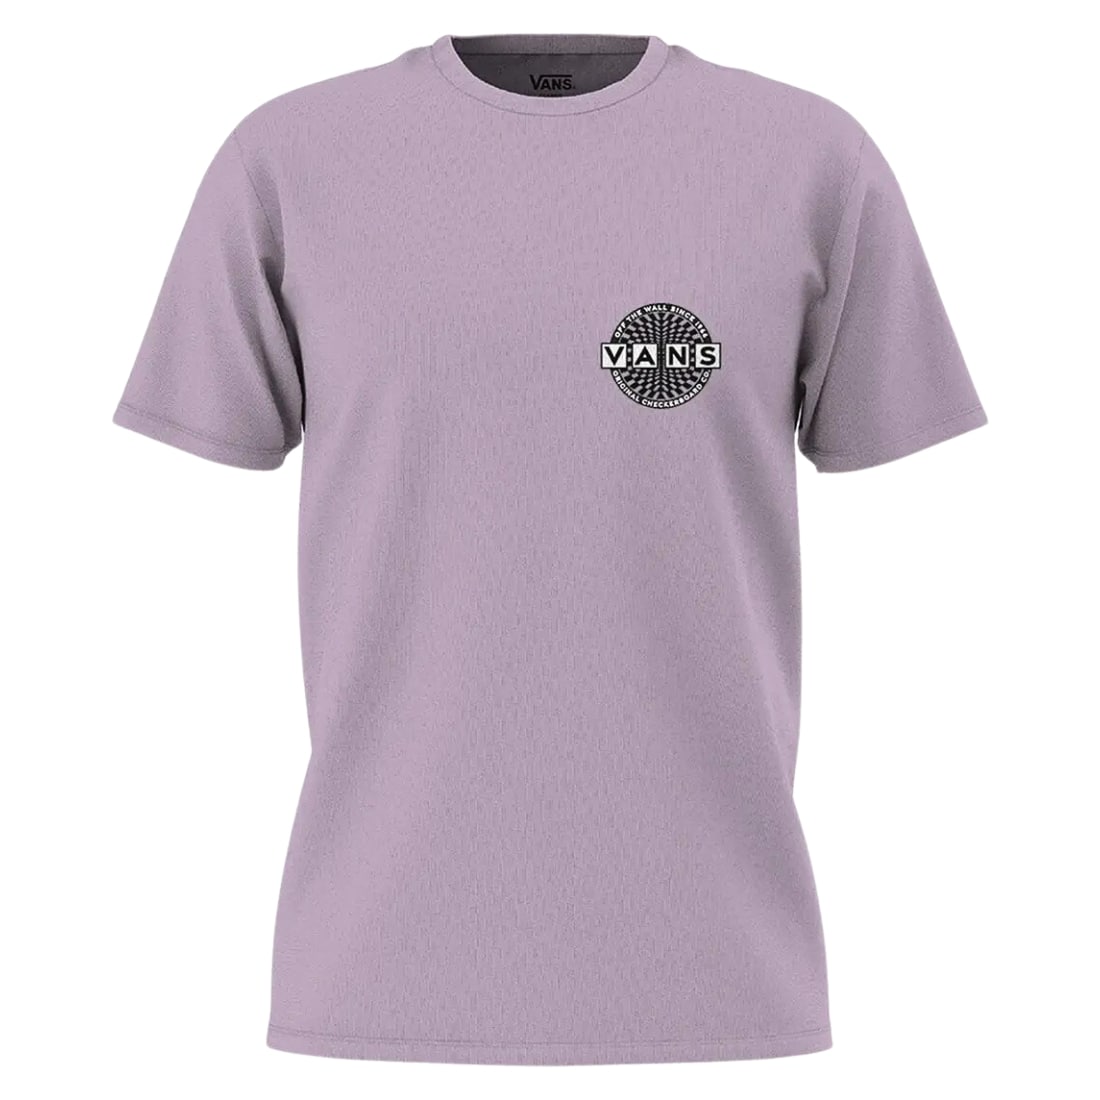 Vans Warped Checkerboard Logo T-Shirt - Lavender - Mens Graphic T-Shirt by Vans